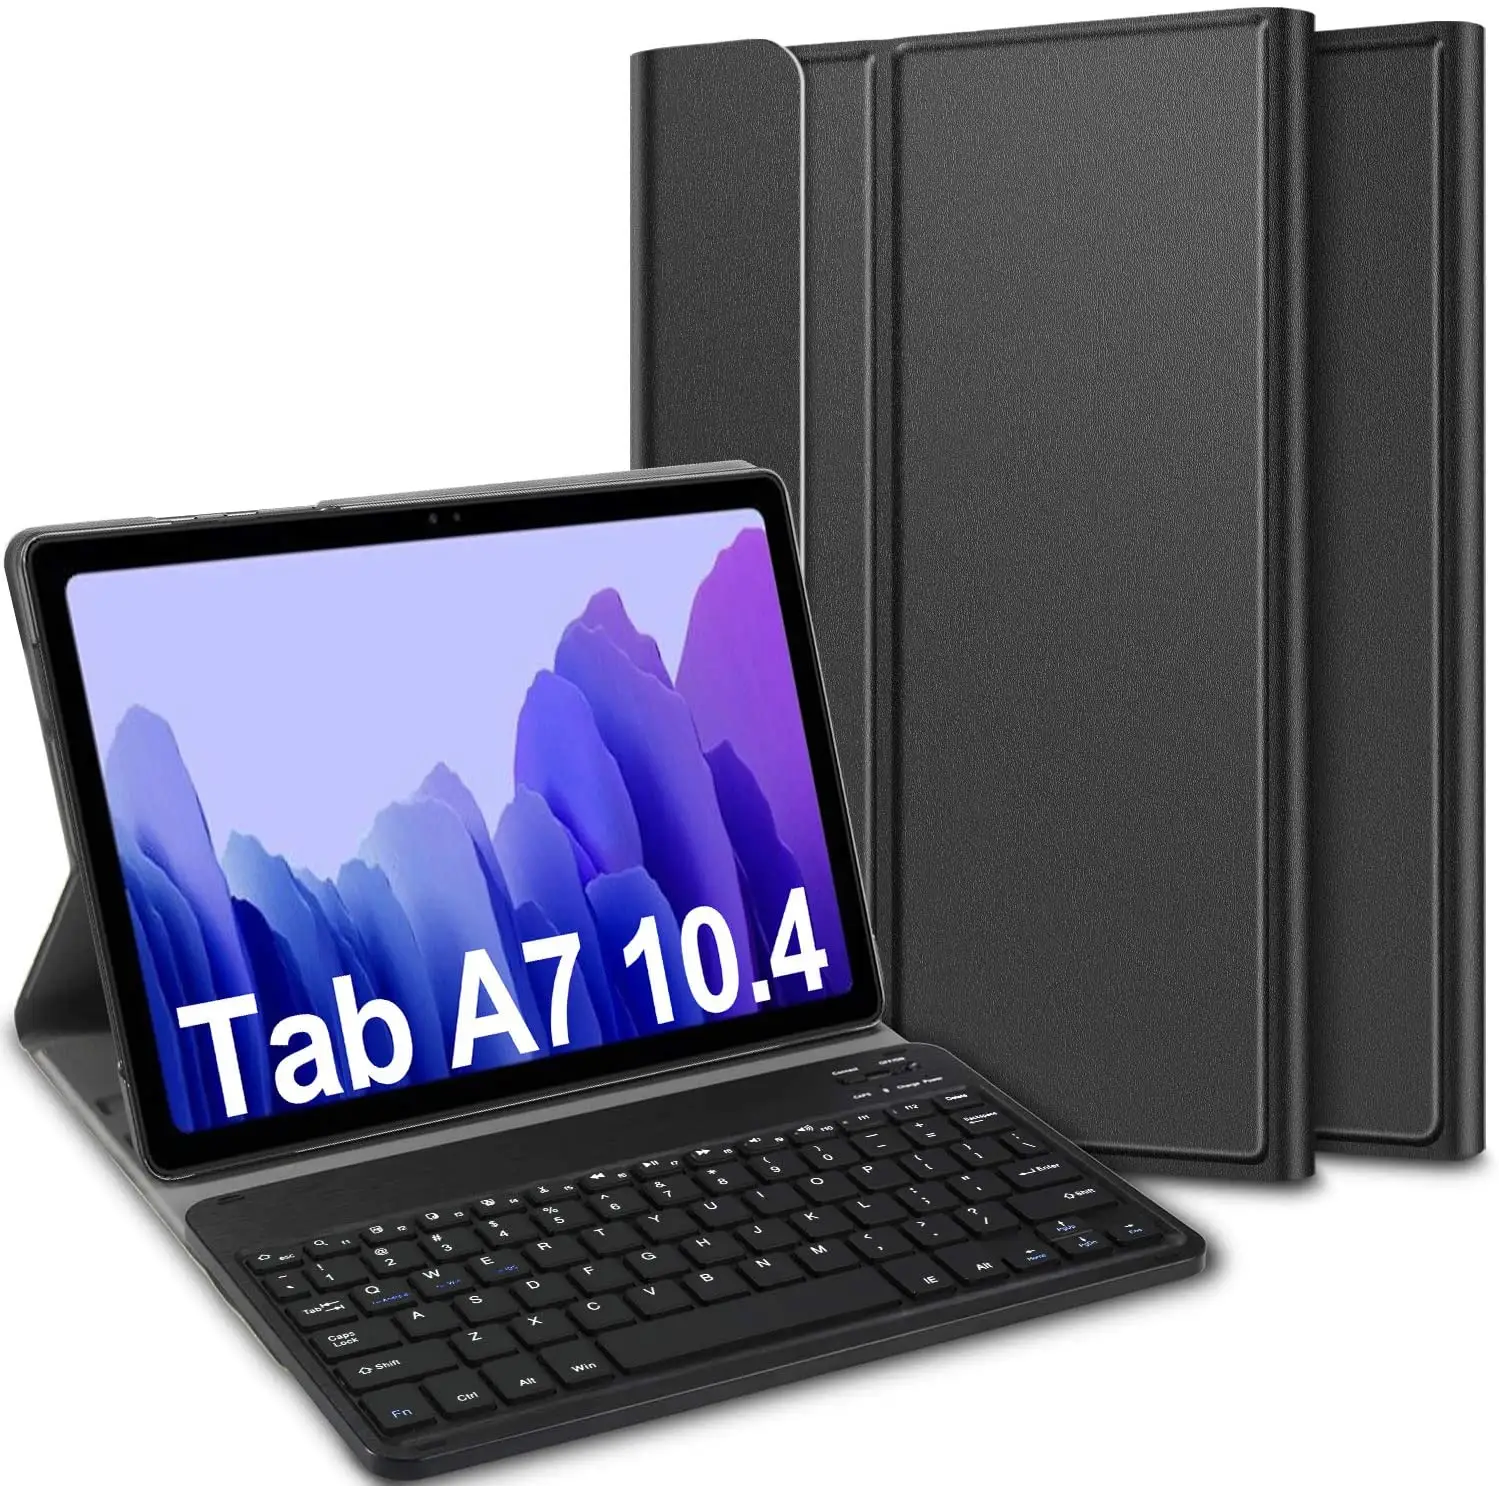 Sıcak satış PU deri Tablet kılıfı Ultra ince kablosuz Bluet ooth klavye kapak Samsung Tab A7 10.4 inç